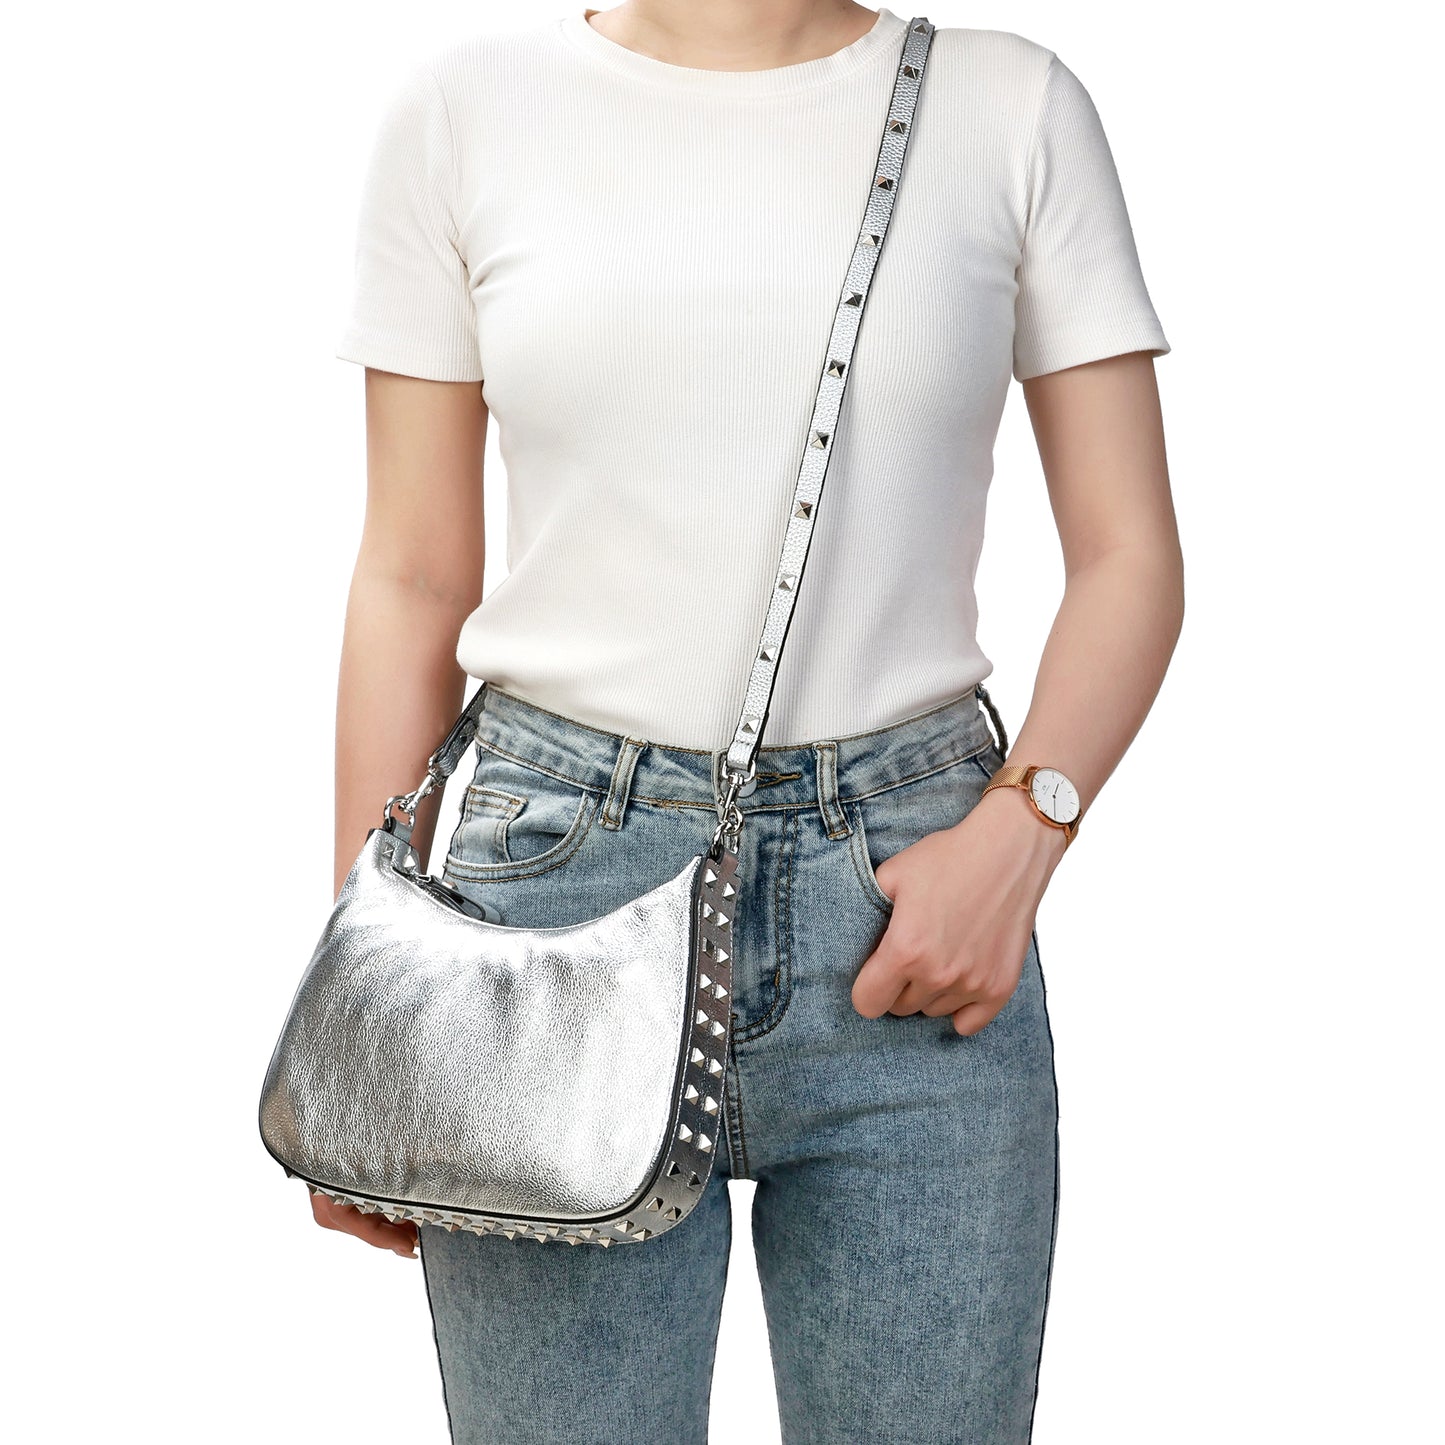 Full-Grain Studded Leather Shoulder/Messenger Bag